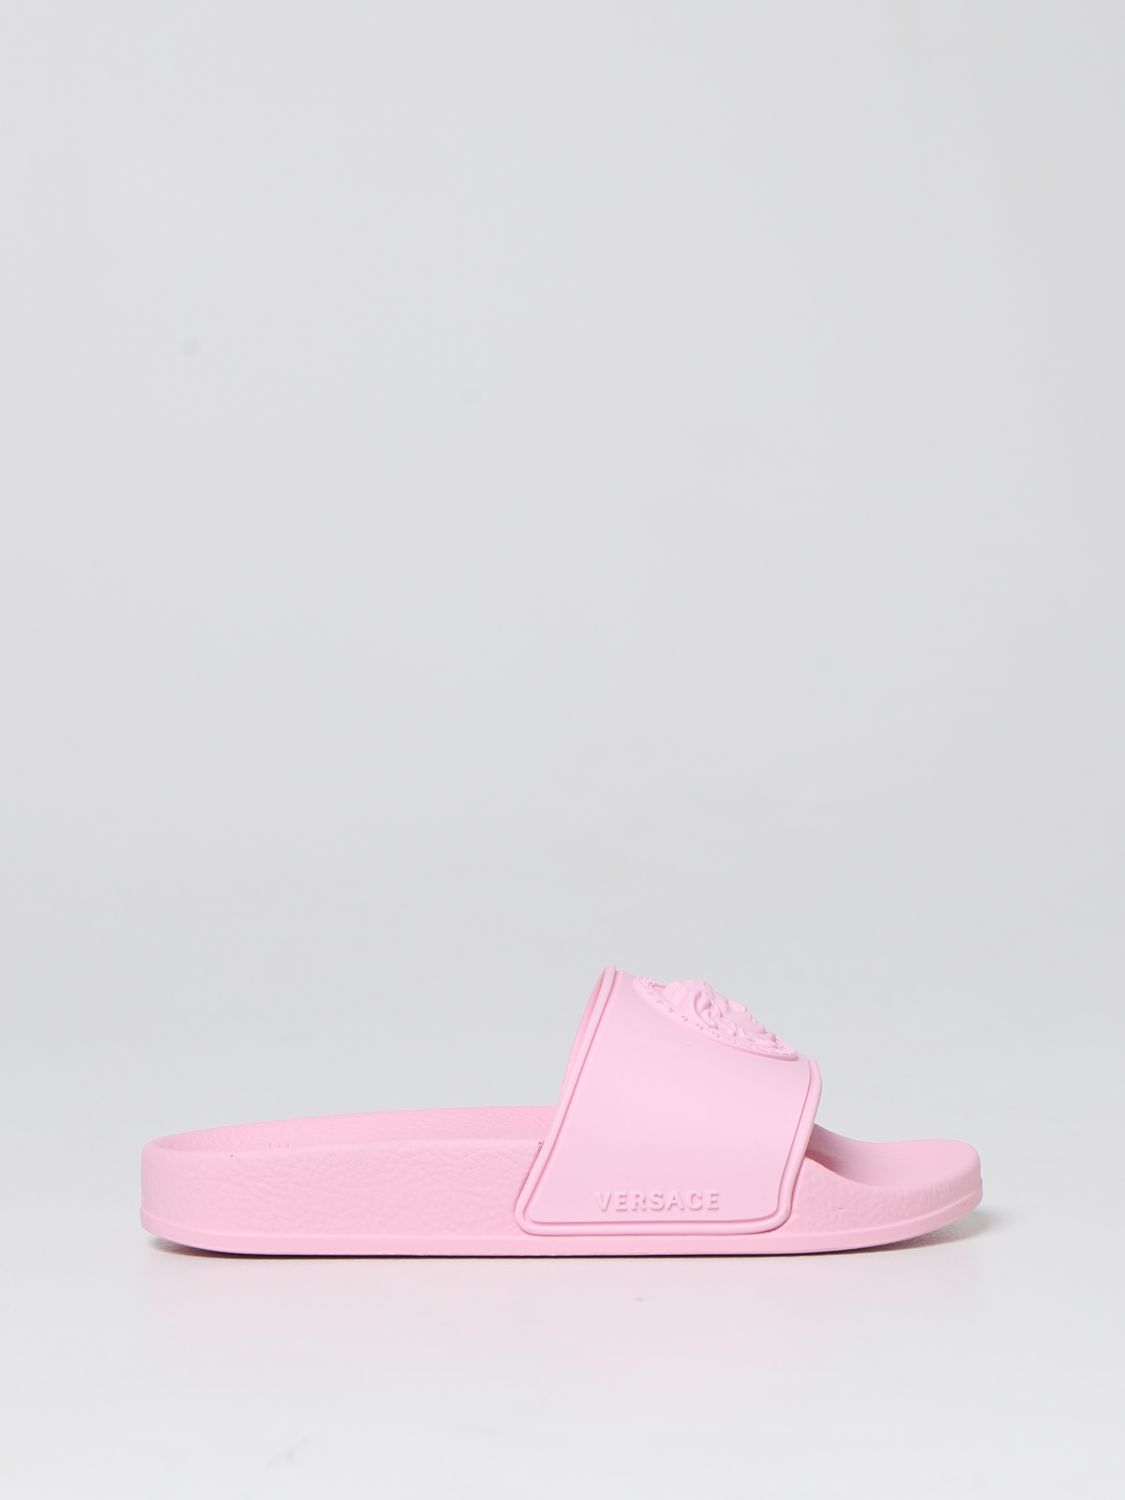 Schuhe Young Versace: Young Versace Jungen Schuhe baby pink 1